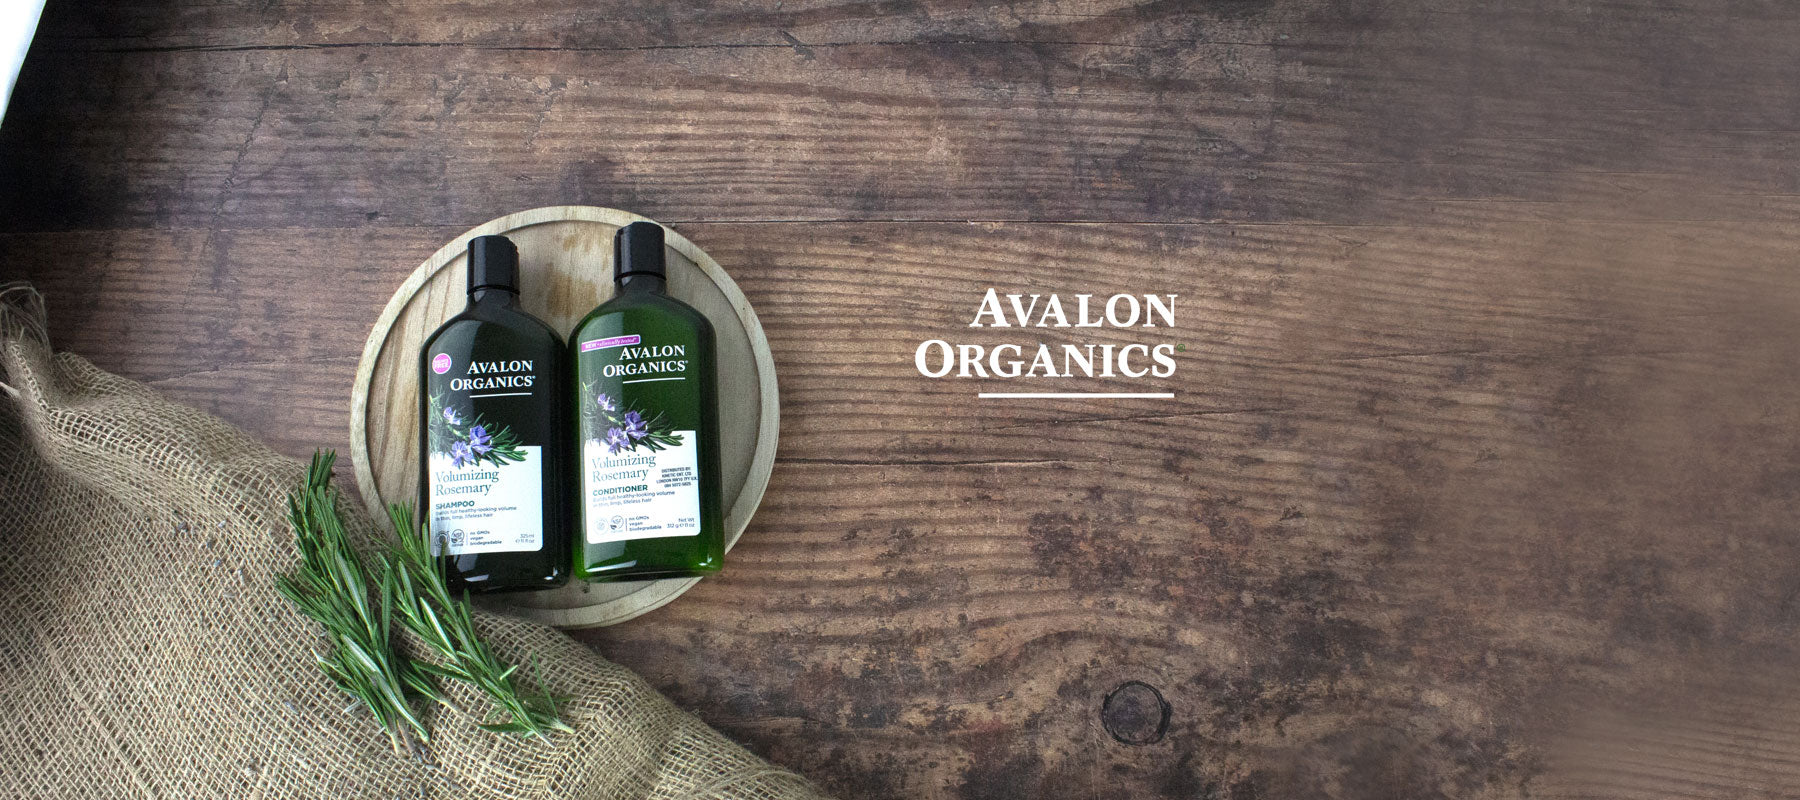 Avalon Organics Natural Skincare and Haircare